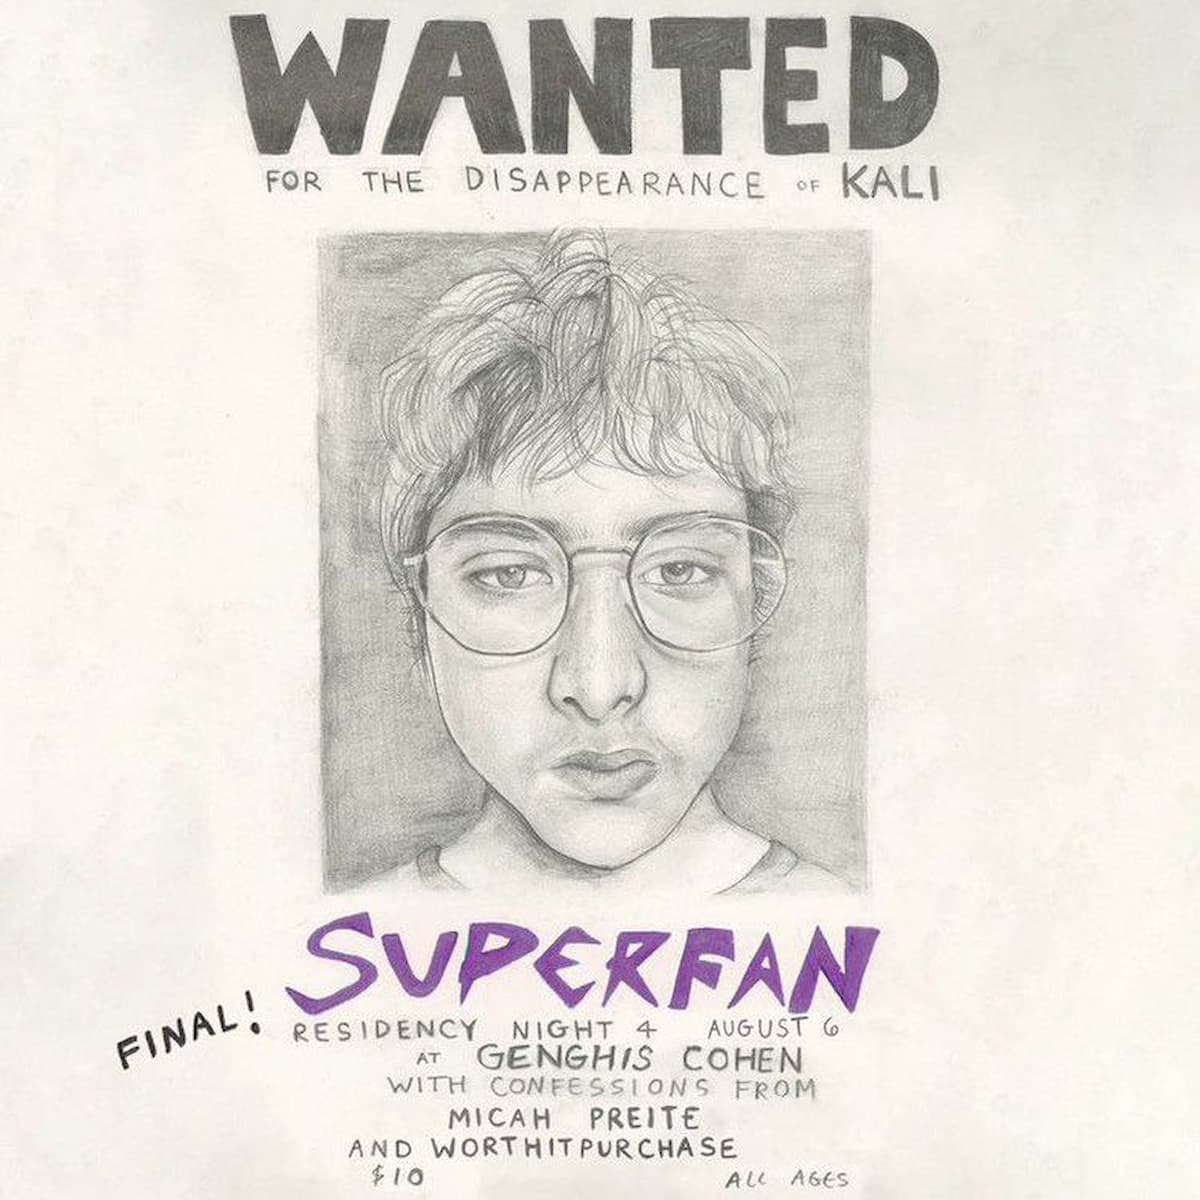 Superfan / Micah Preite / Worthitpurchase